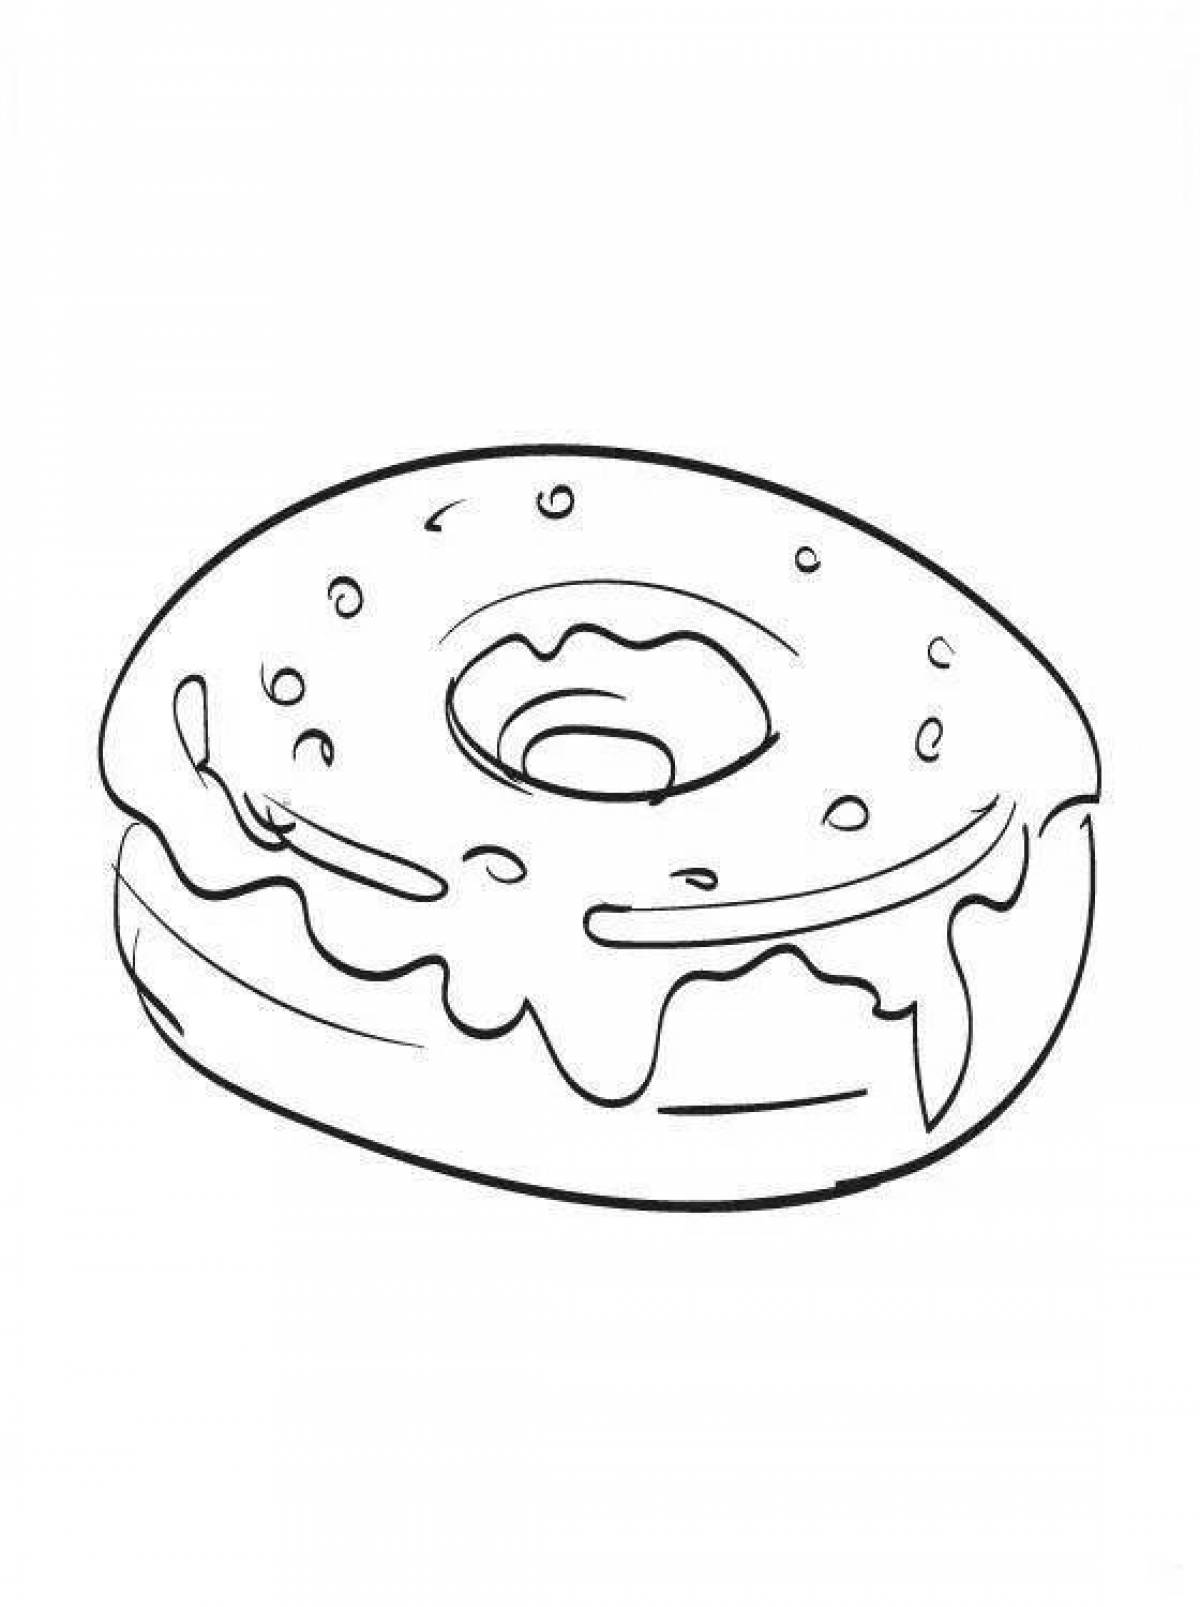 Children's donut #1